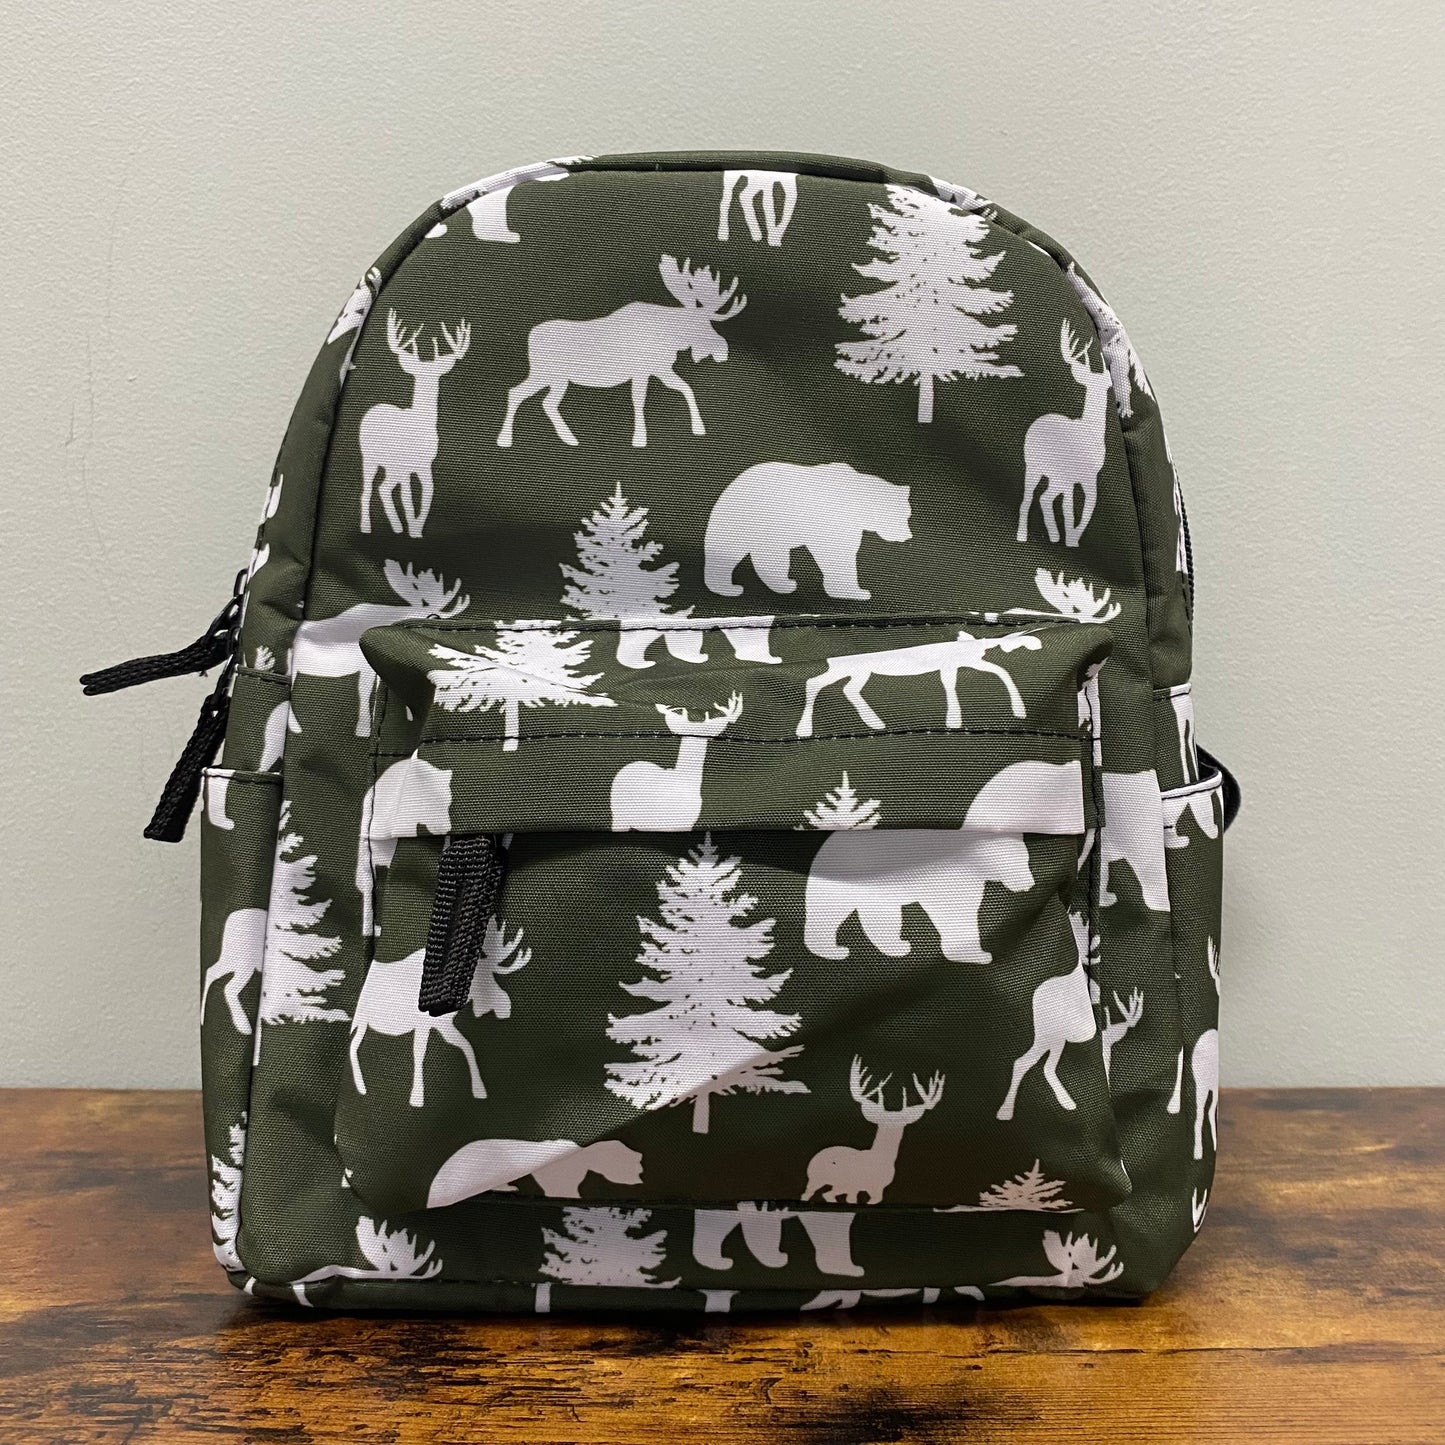 Mini Backpack - Woodland Creatures